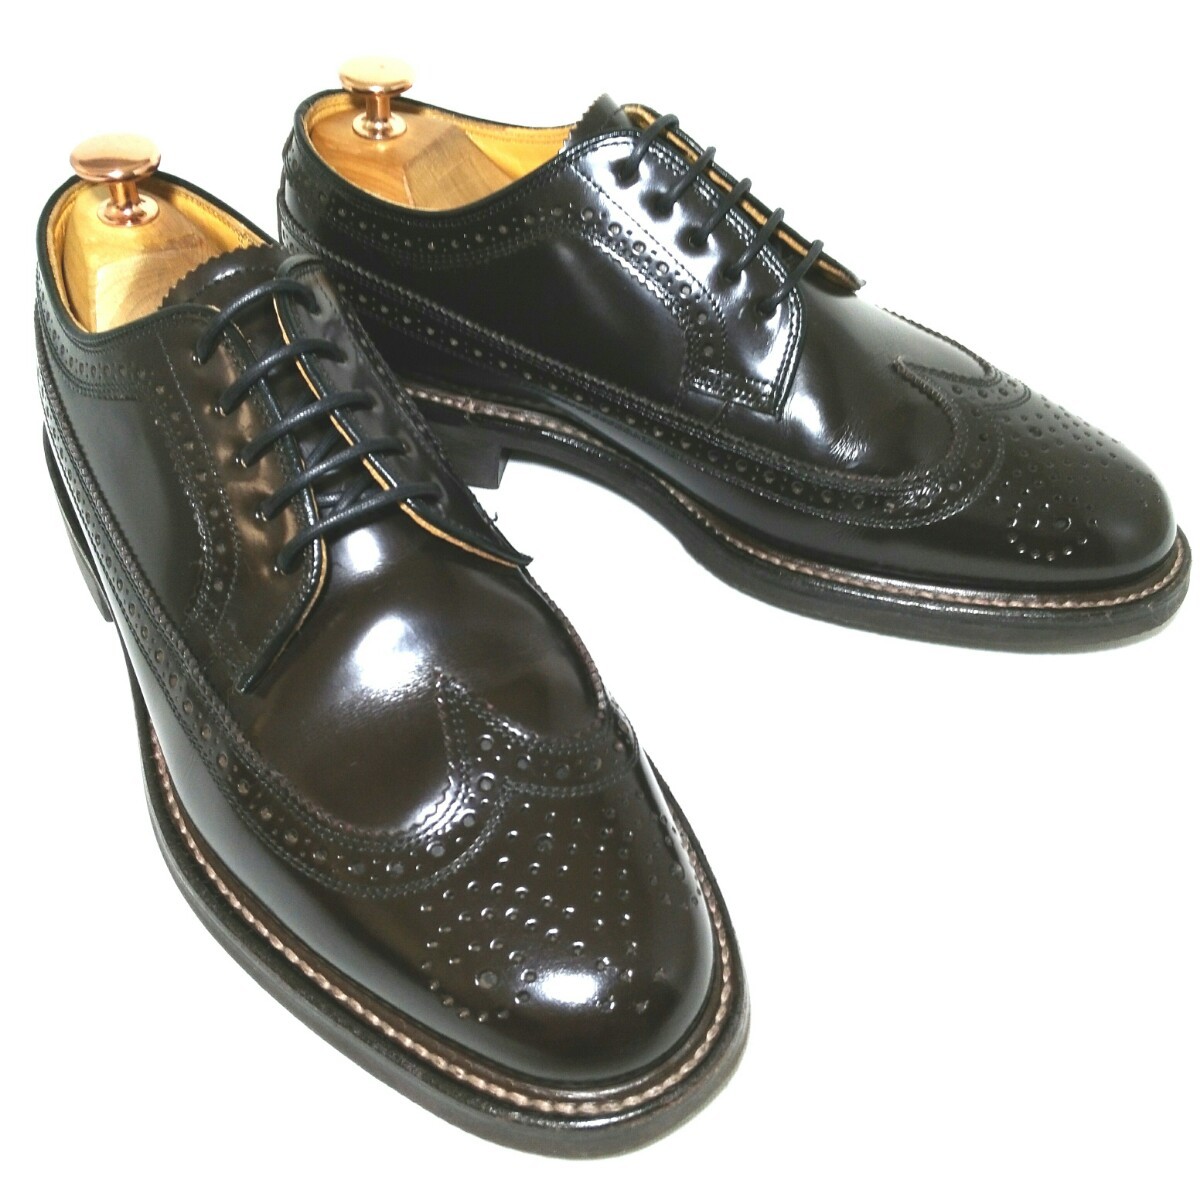 C298【REGAL】リーガル フルブローグ  24.5cm W218 ダークブラウン 革靴 紳士靴 メンズ レザーシューズ GEOX ジェオックスの画像2